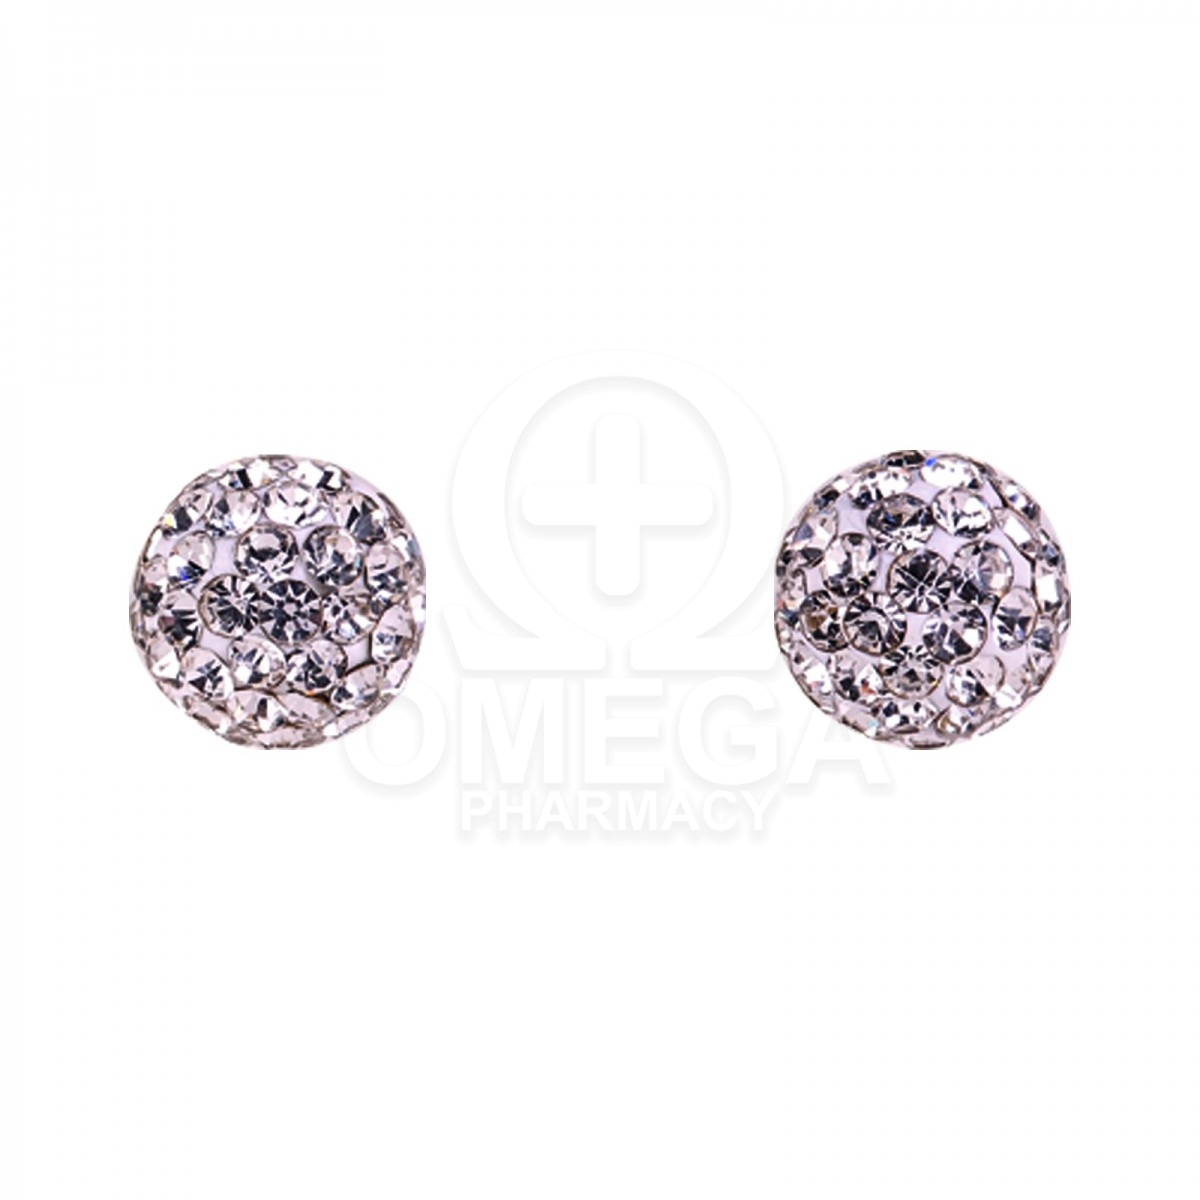 MEDISEI Dalee Jewels Earrings No 05420 White Crystals Ball Υποαλλεργικά  Σκουλαρίκια από Ασήμι 925 με Ρόδιο, Λευκές Μπάλες από Ζι